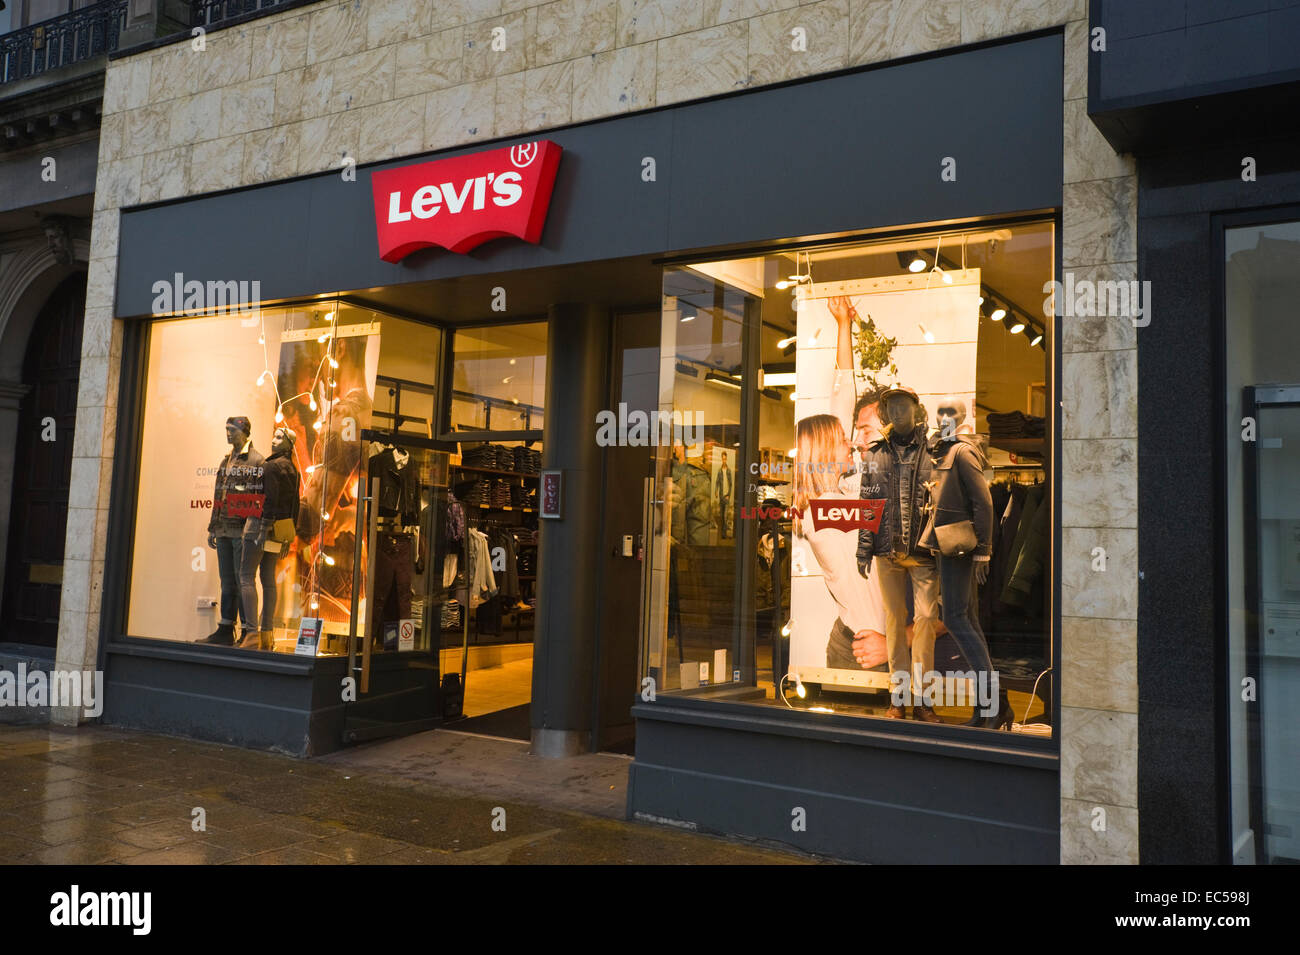 Levis Shop High Resolution Stock 